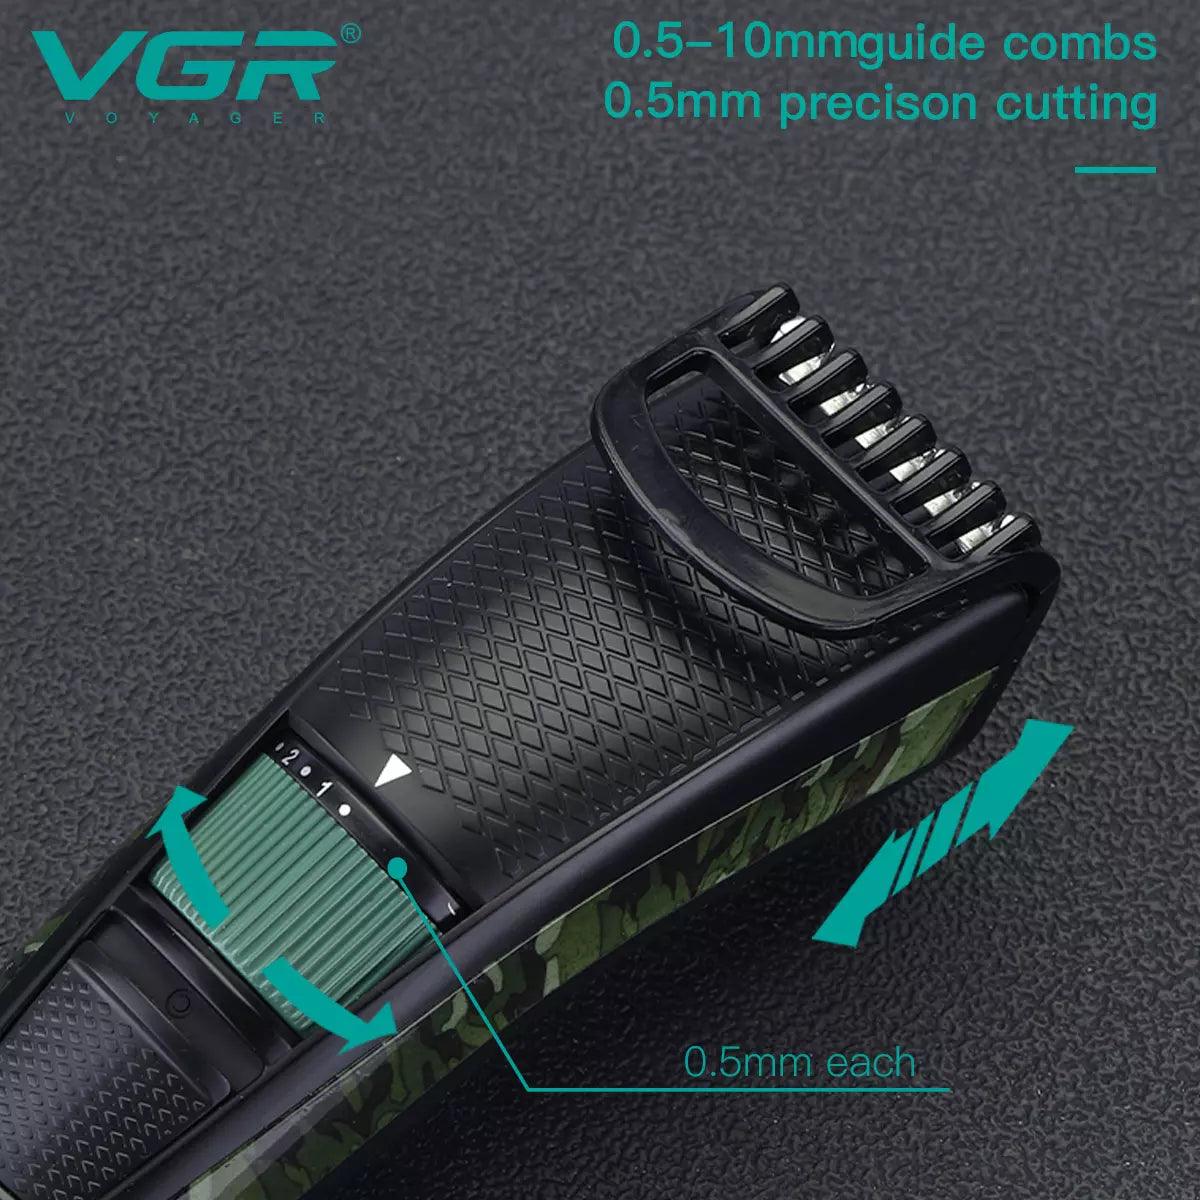 VGR V-053 Hair Trimmer For Men, Army Green - VGR Official India